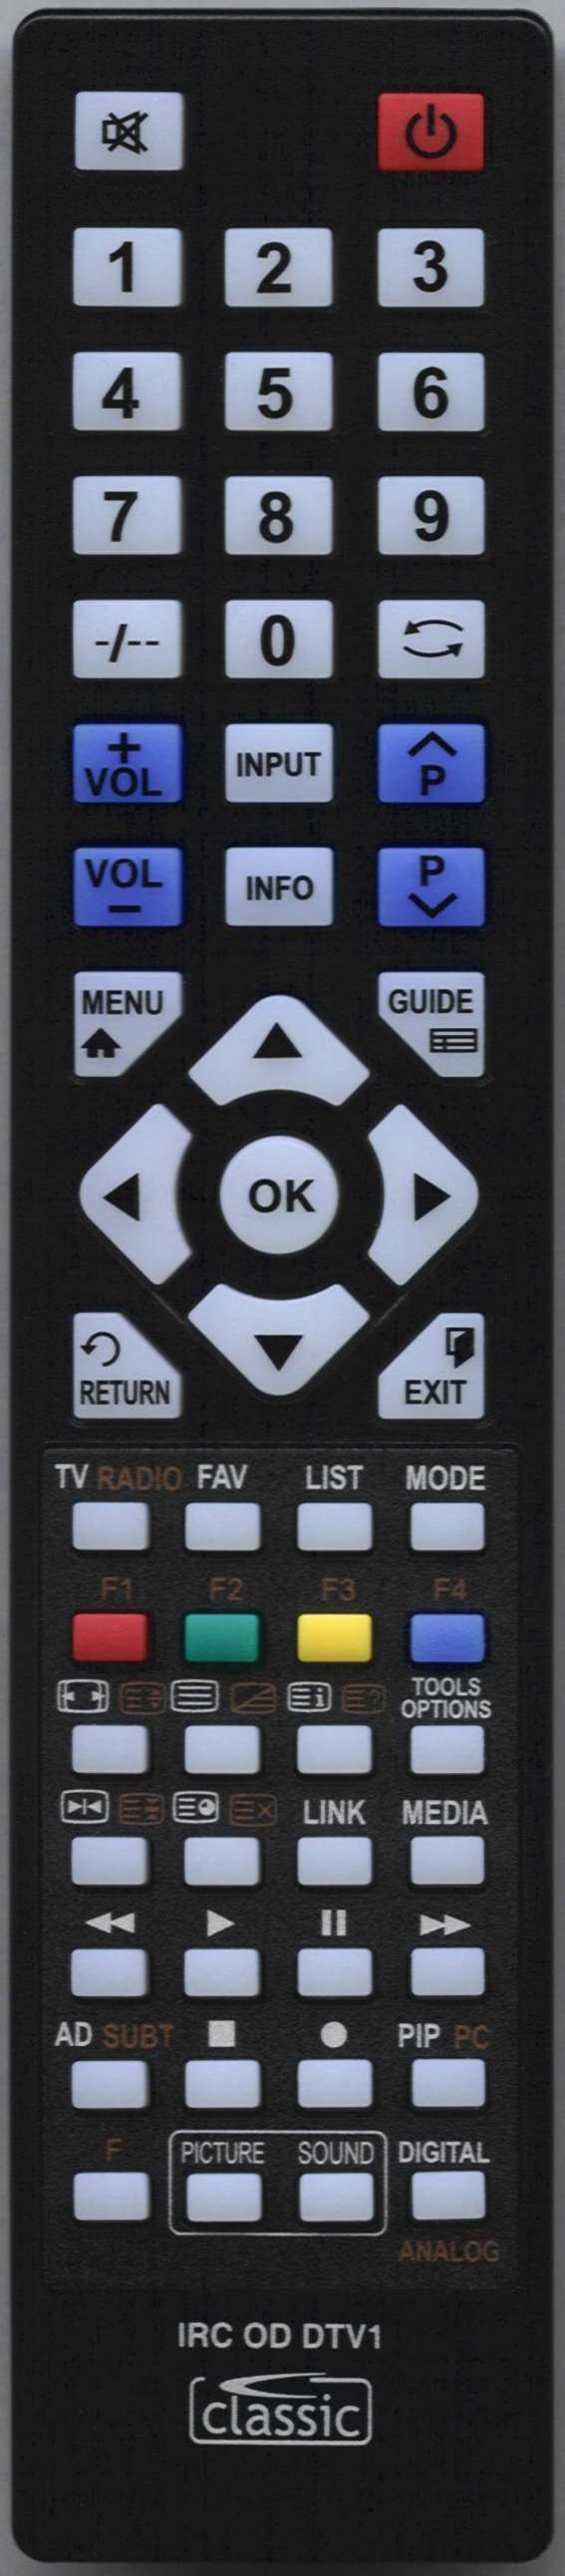 Orion CLB22B161S Remote Control